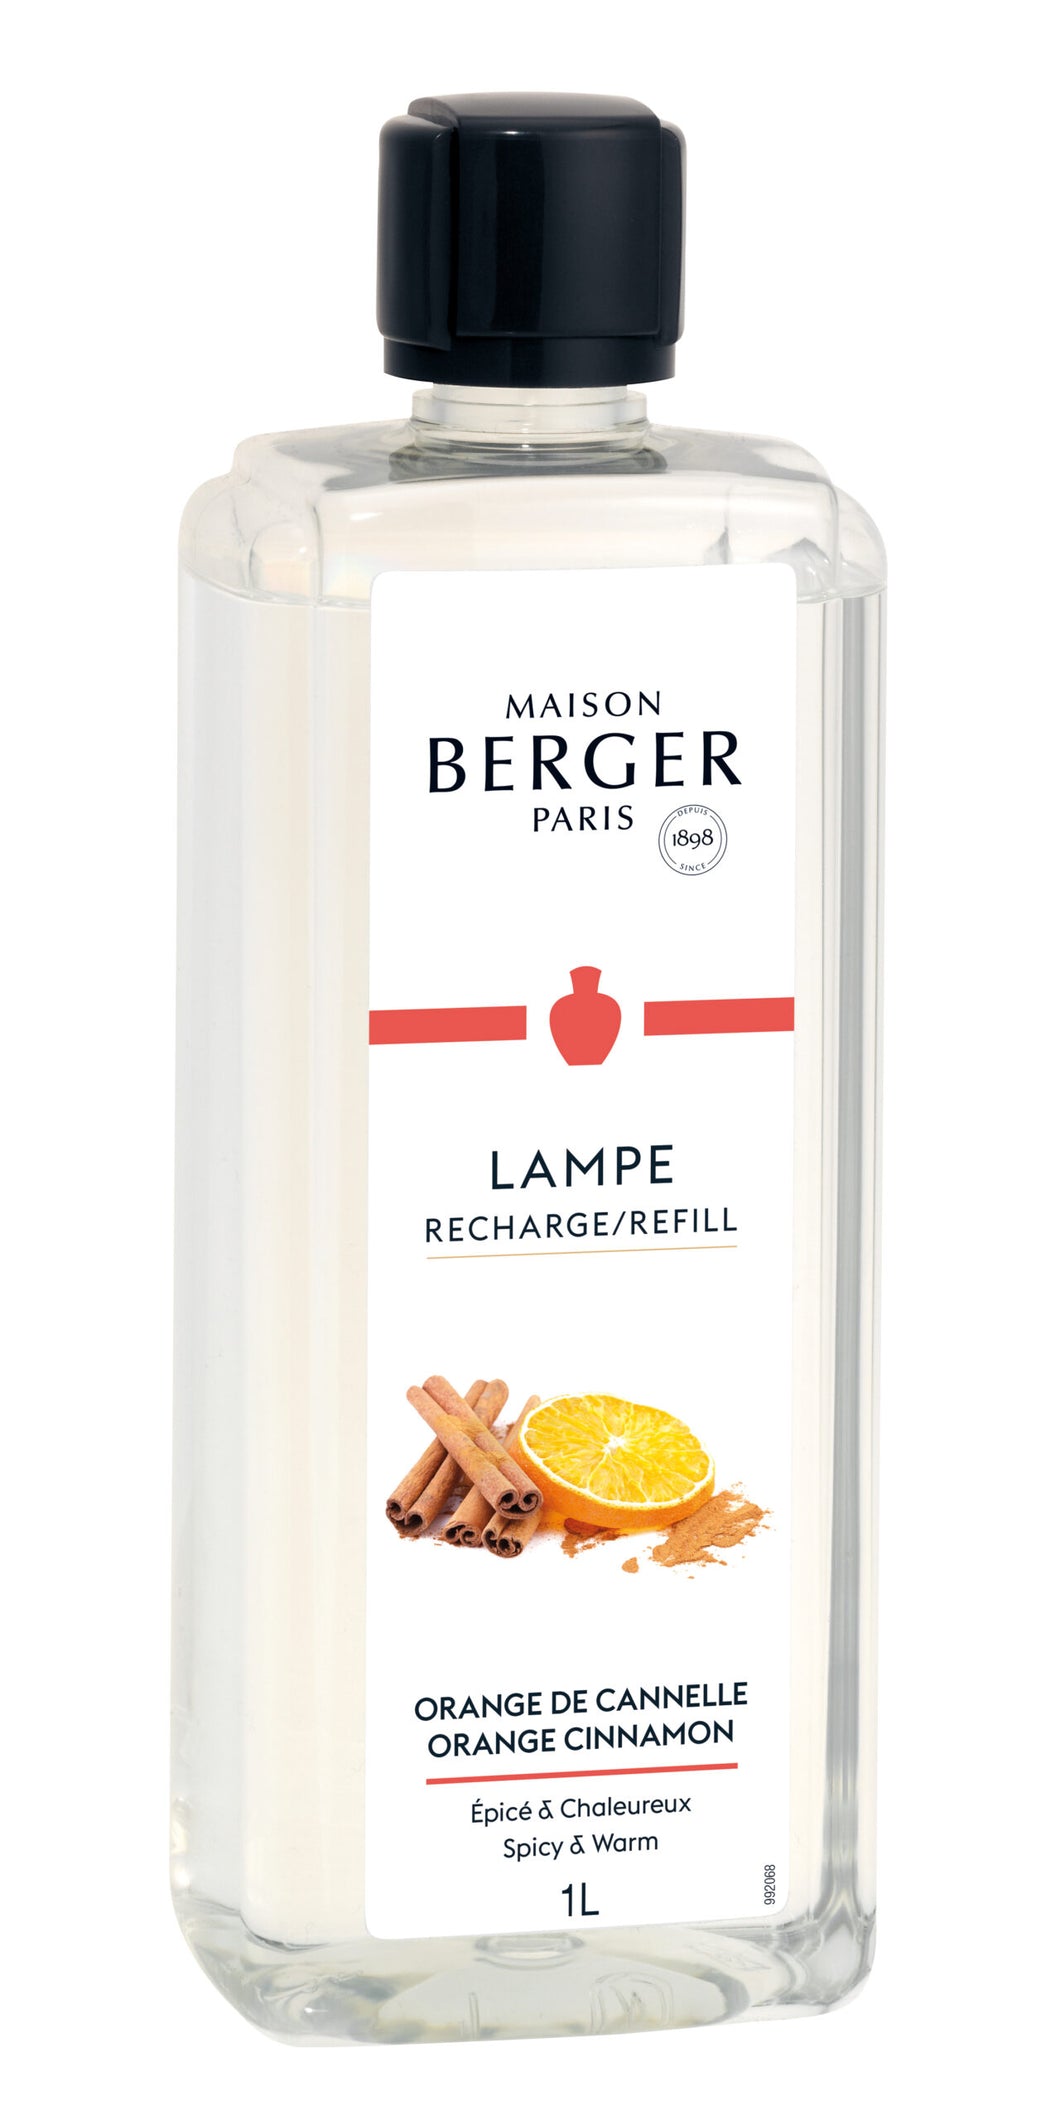 Maison Berger Orange Cinnamon 1L